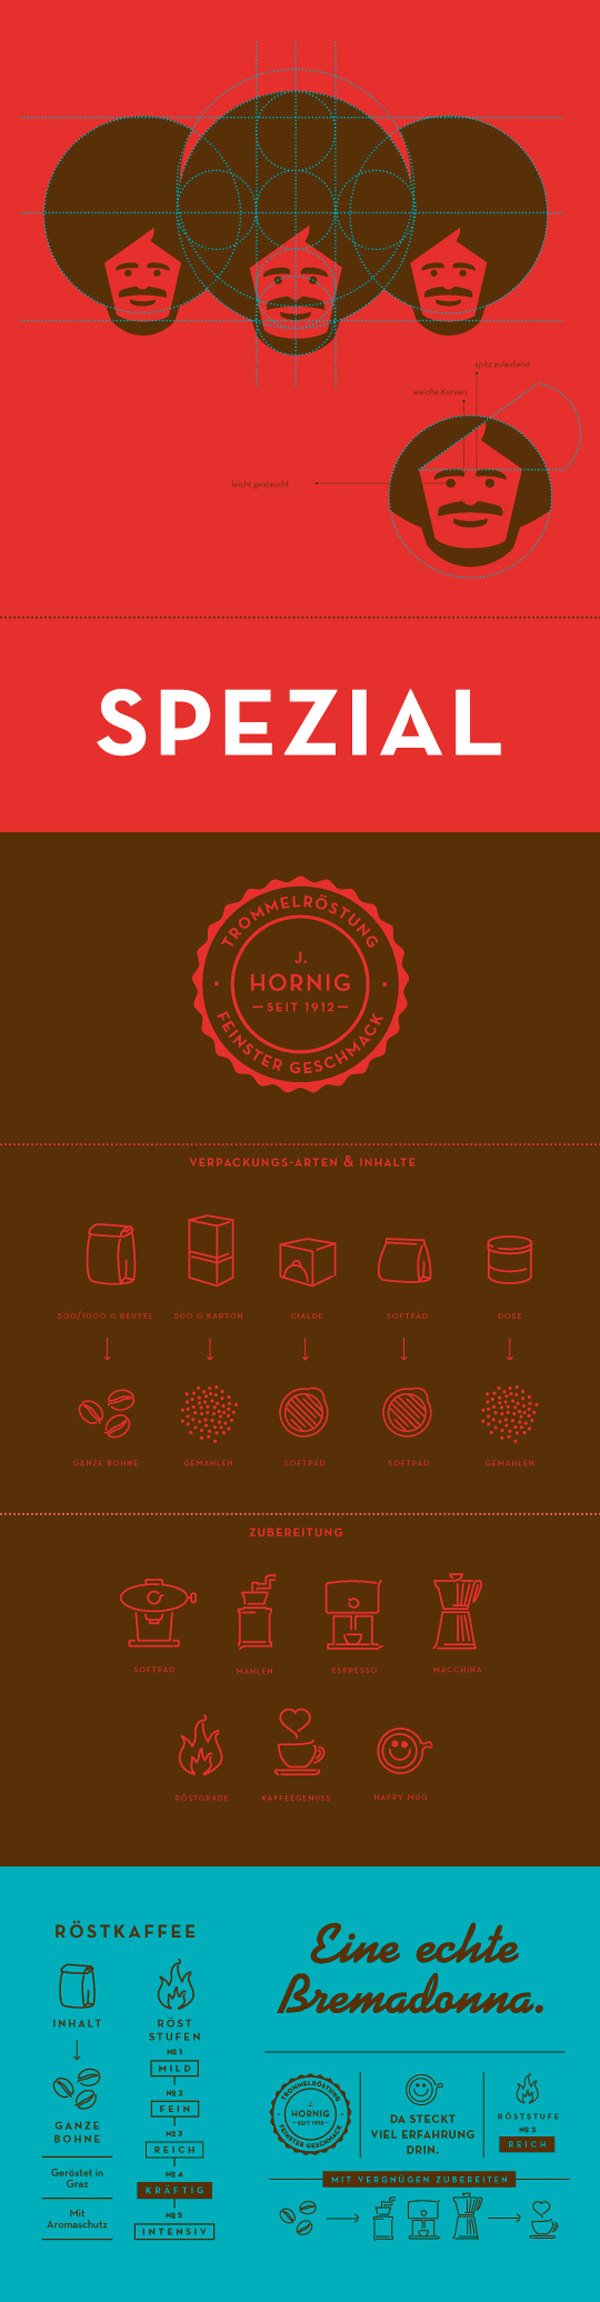 J. Hornig - Coffee Branding by Moodley Brand Identity